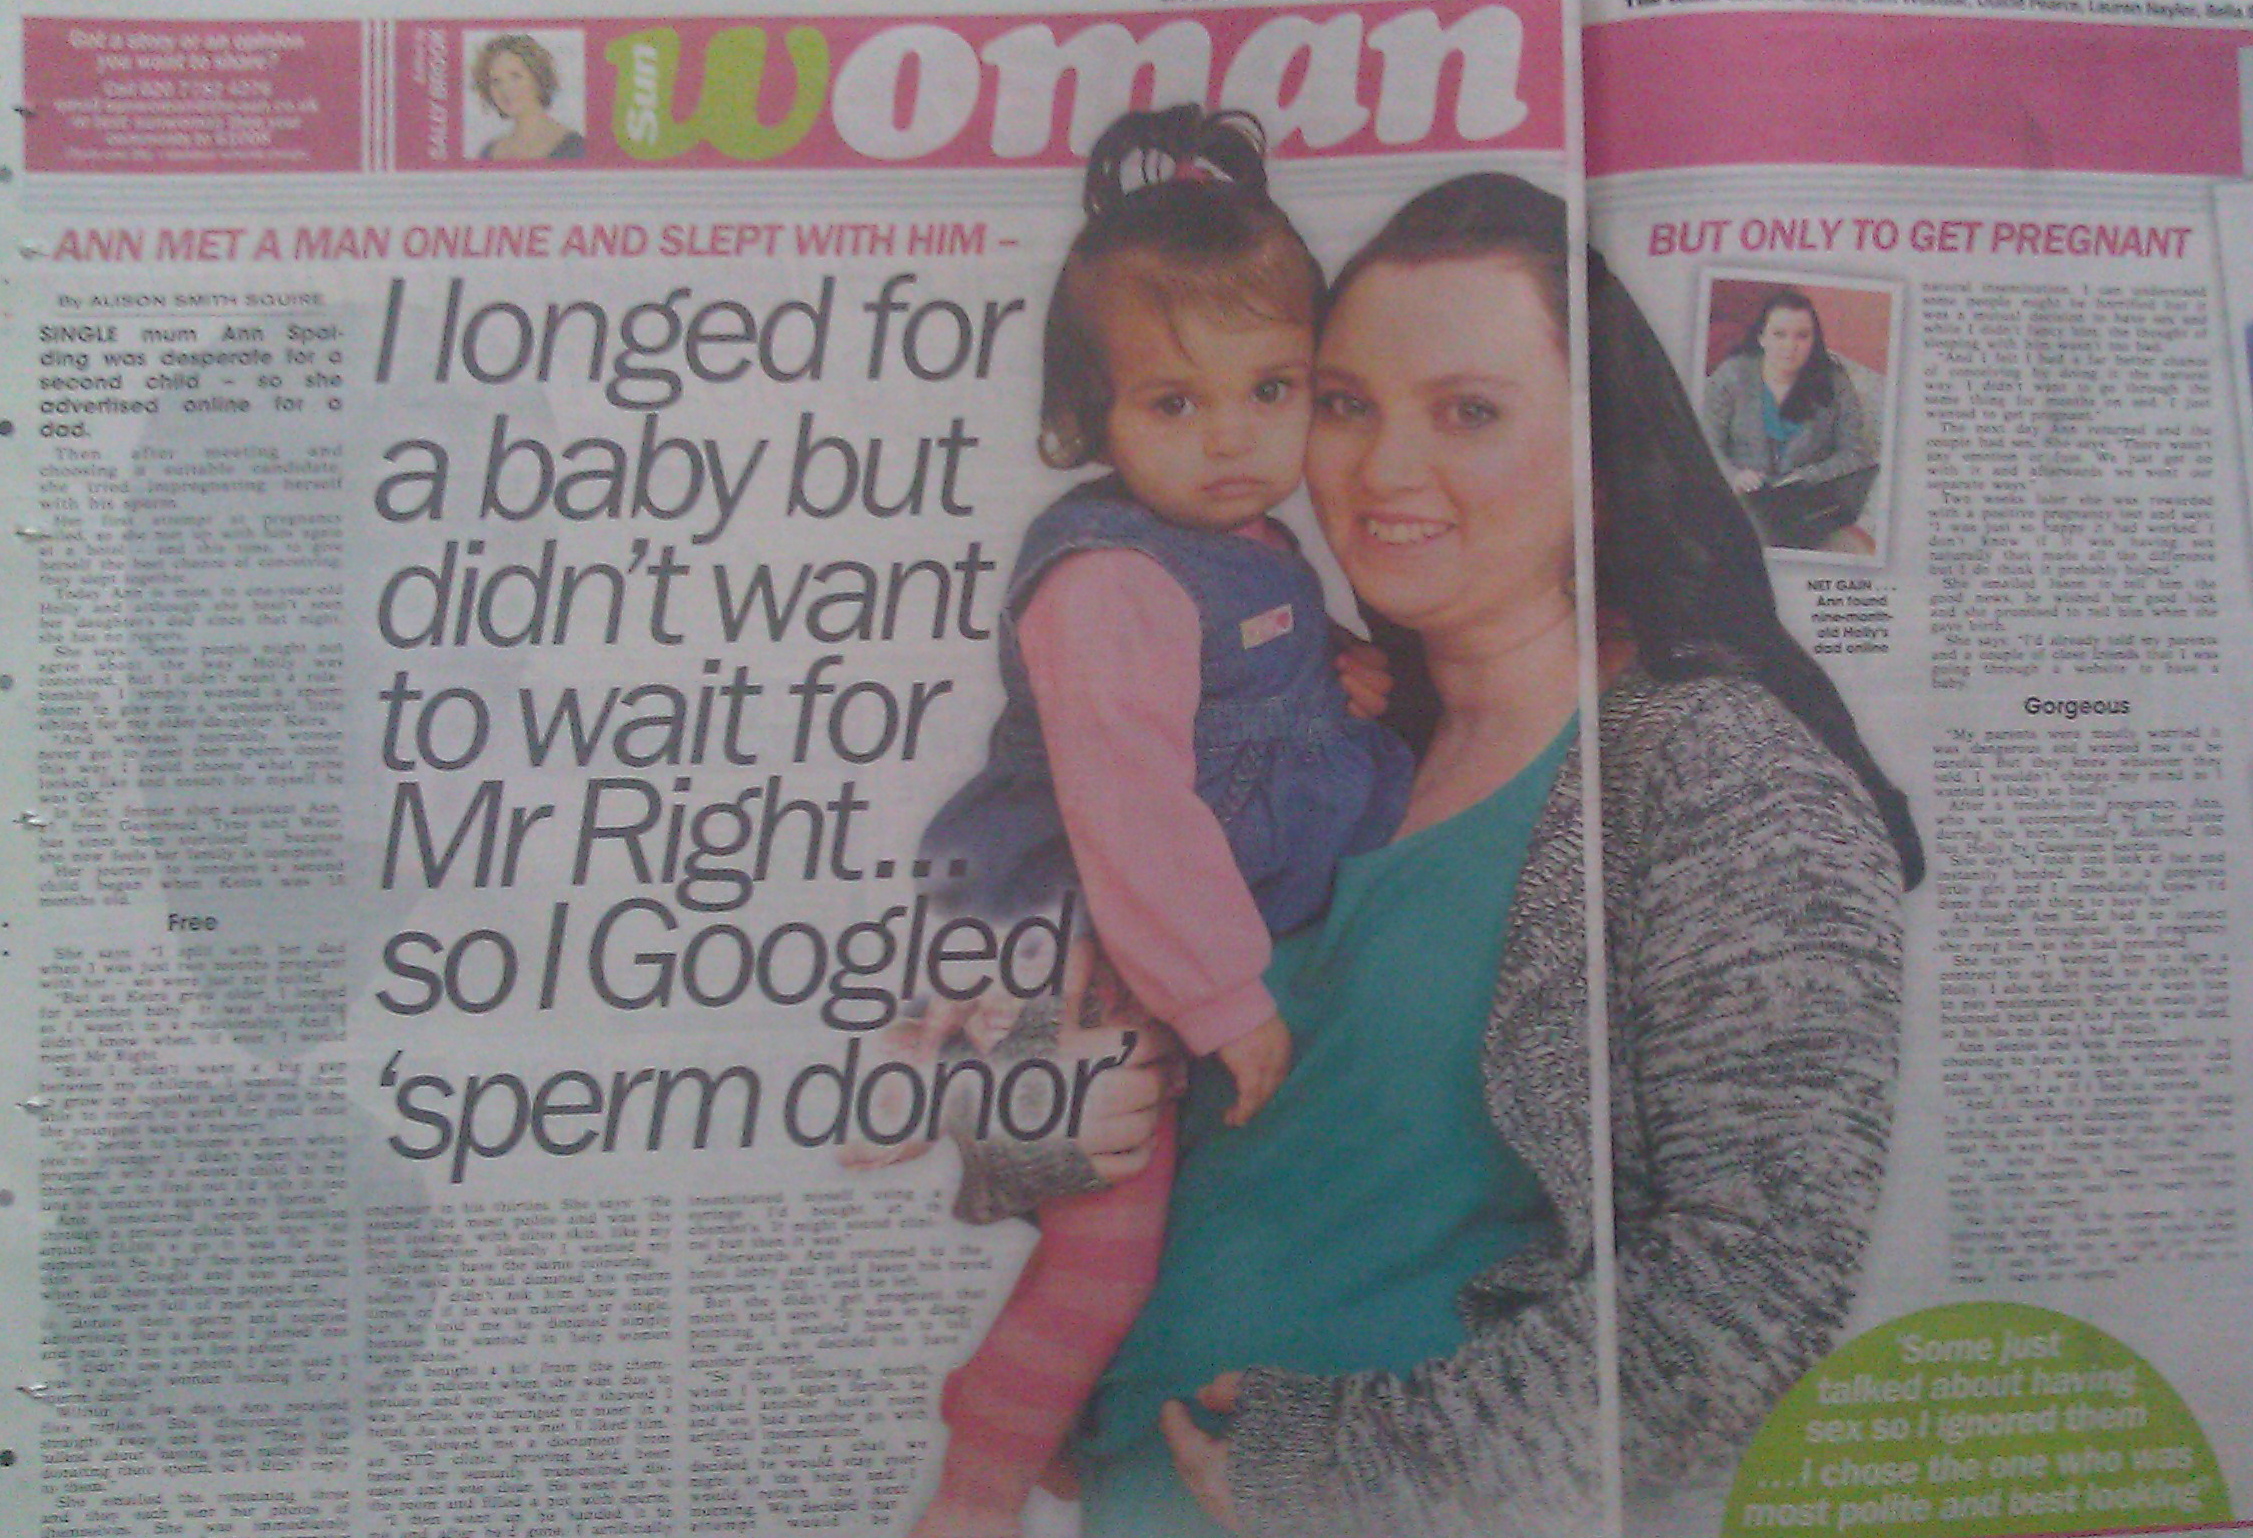 I wanted a baby - so I googled 'sperm donor'...